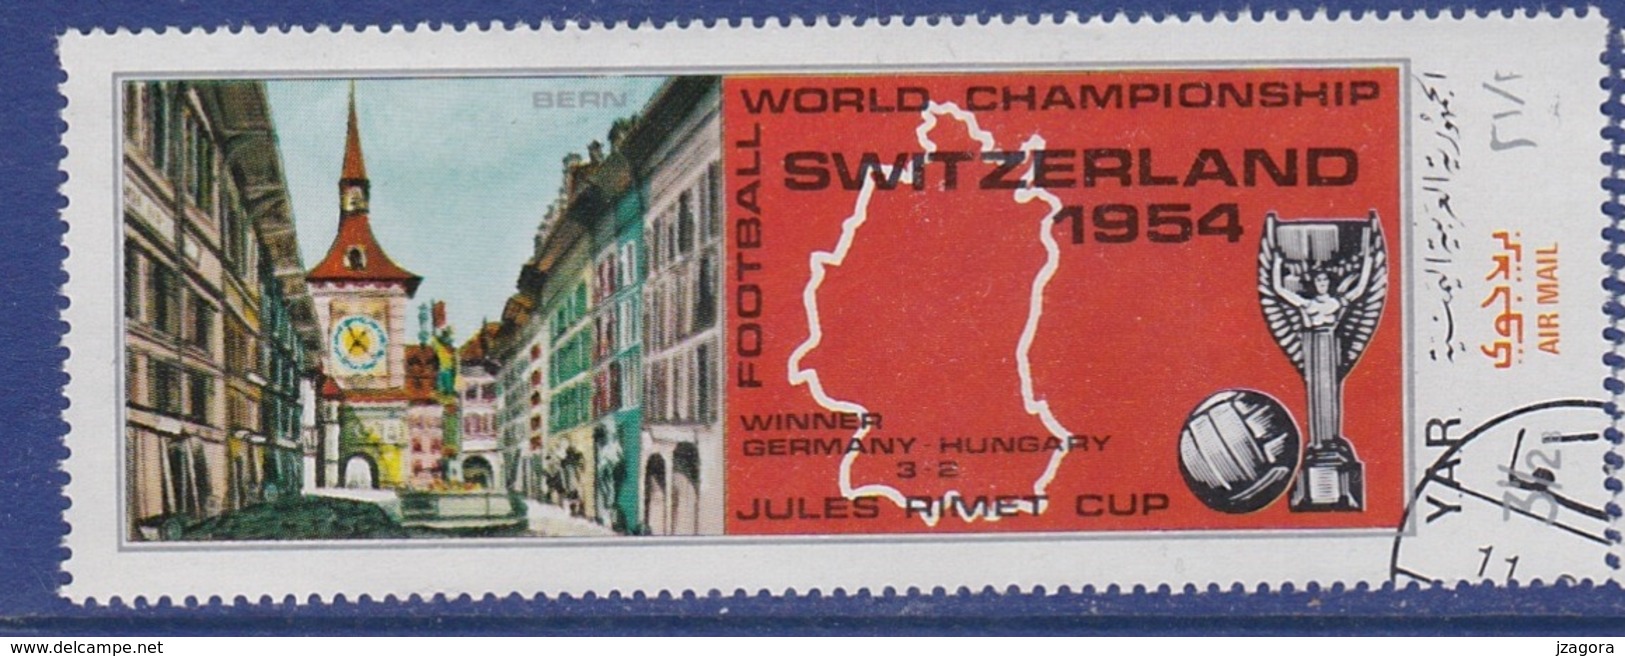 SOCCER FOOTBALL WORLD CHAMPIONSHIP MUNDIAL SWITZERLAND 1954 - YAR YEMEN - 1954 – Switzerland